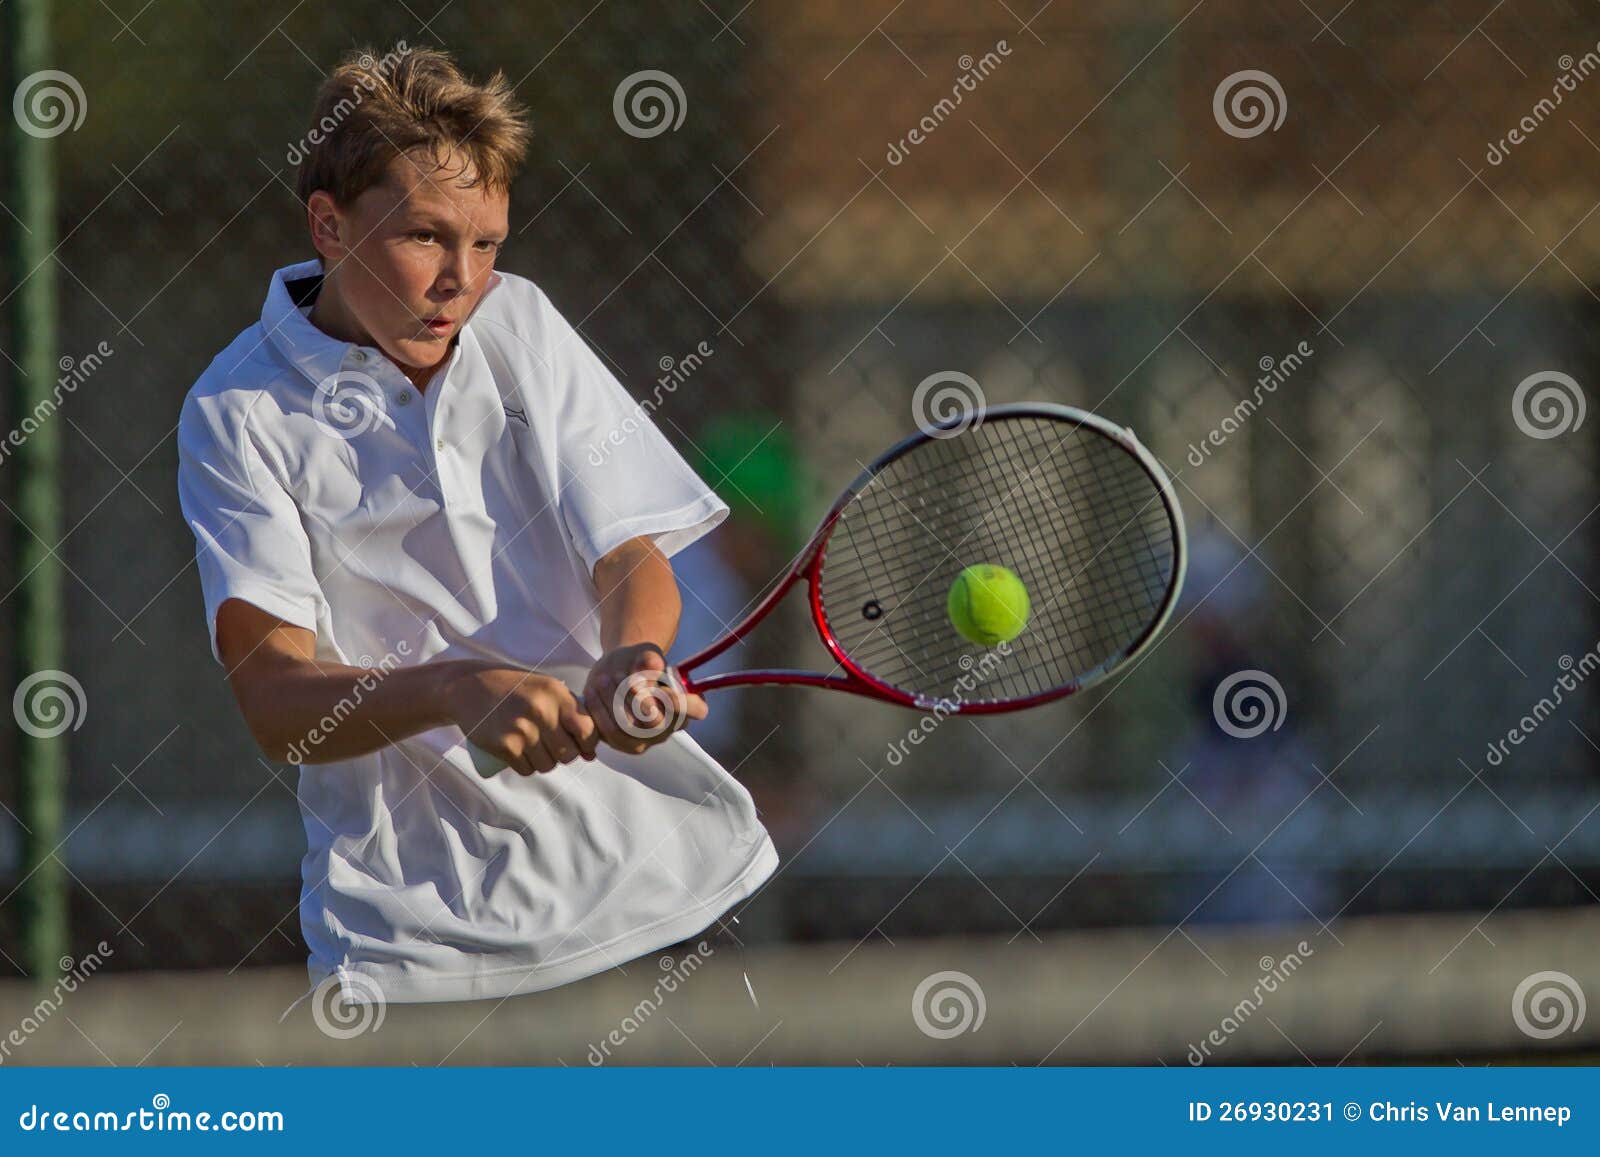 Tennis Player Ball Strike Editorial Photo Image Of Boys